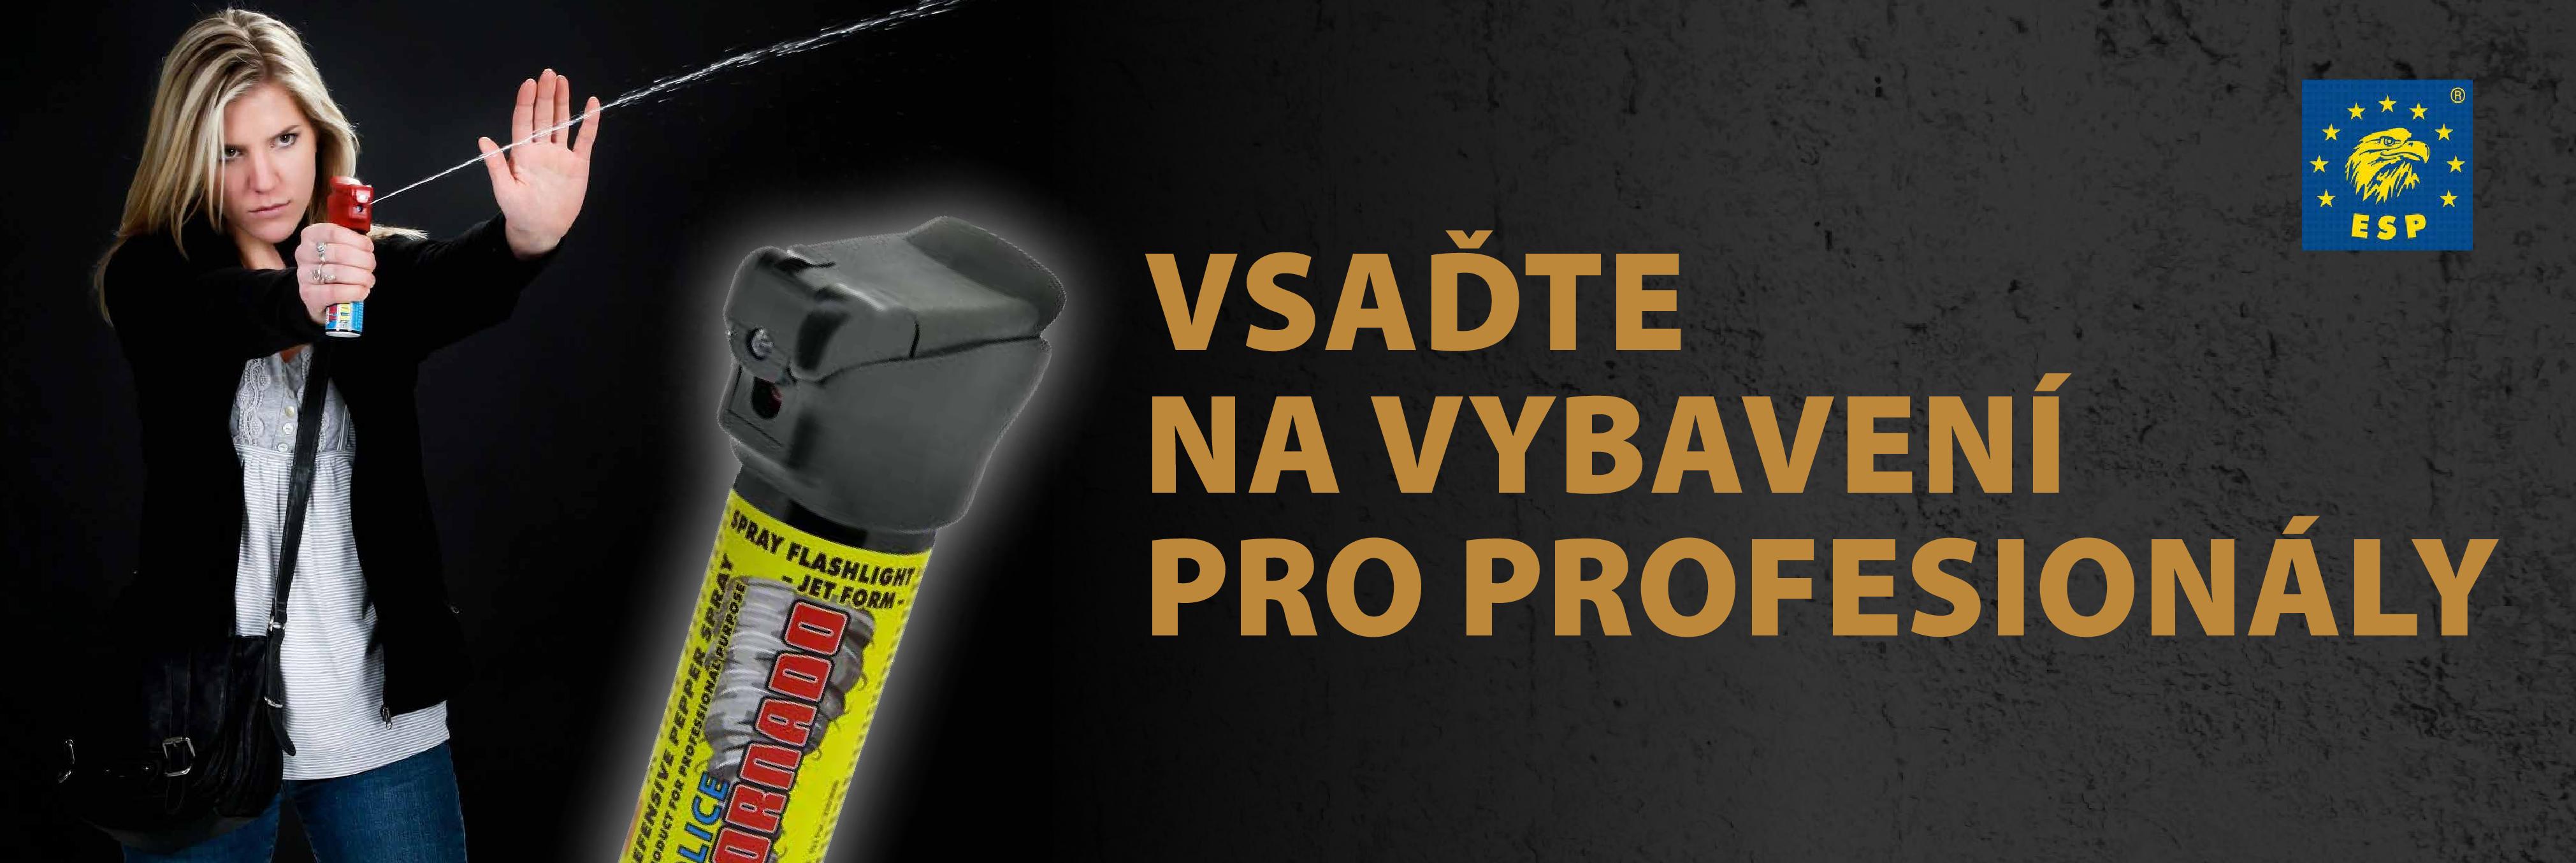 Euro Security Products - Kravmagashop.cz